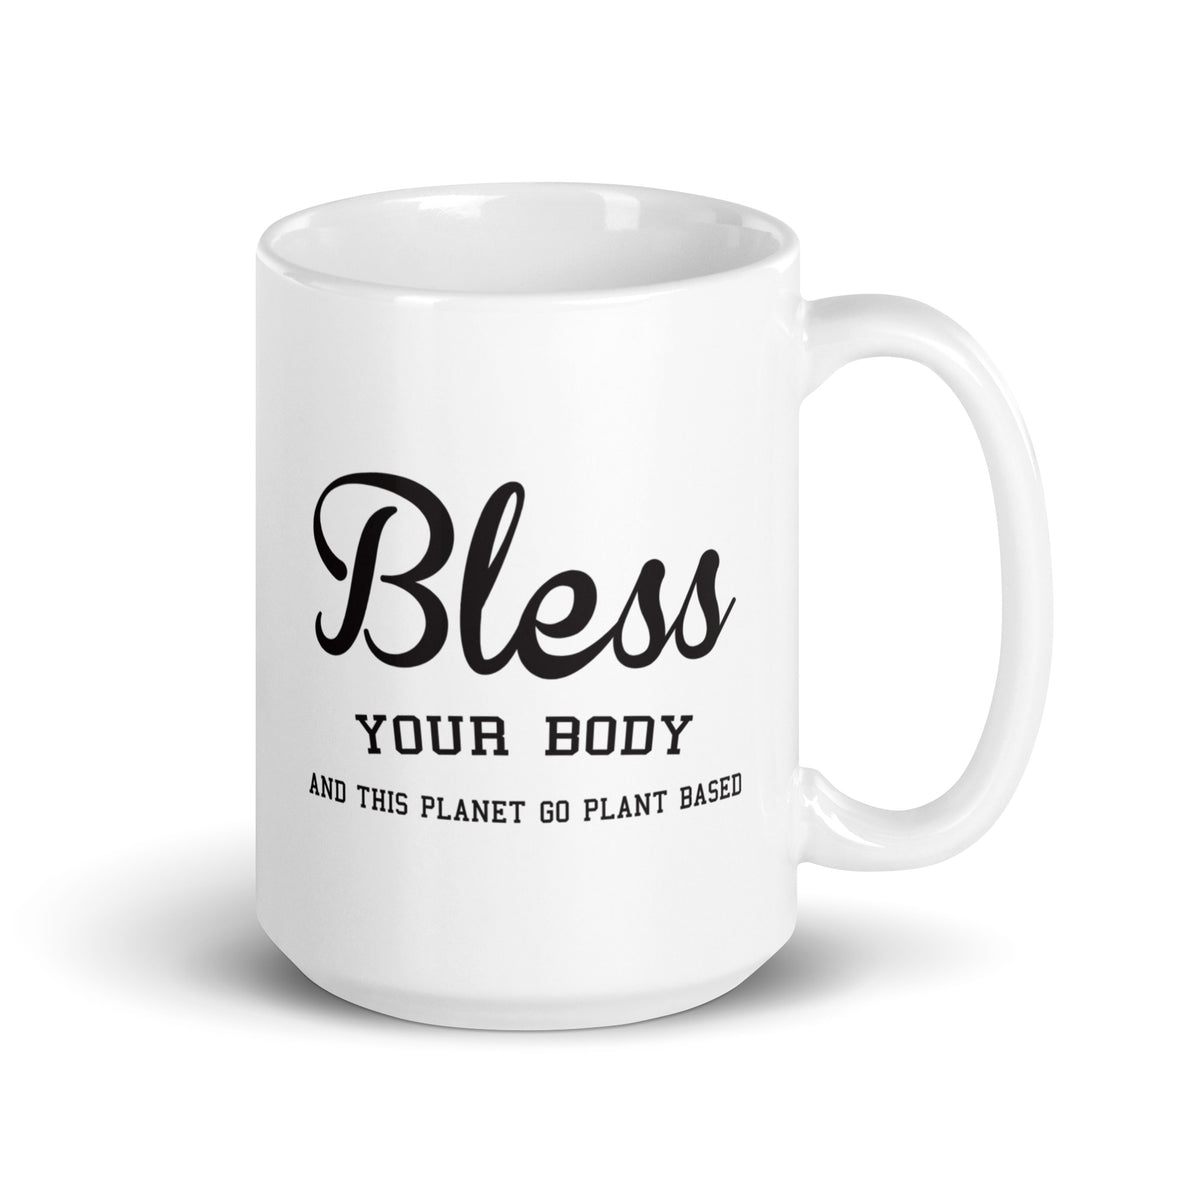 BLESS YOUR BODY White glossy mug